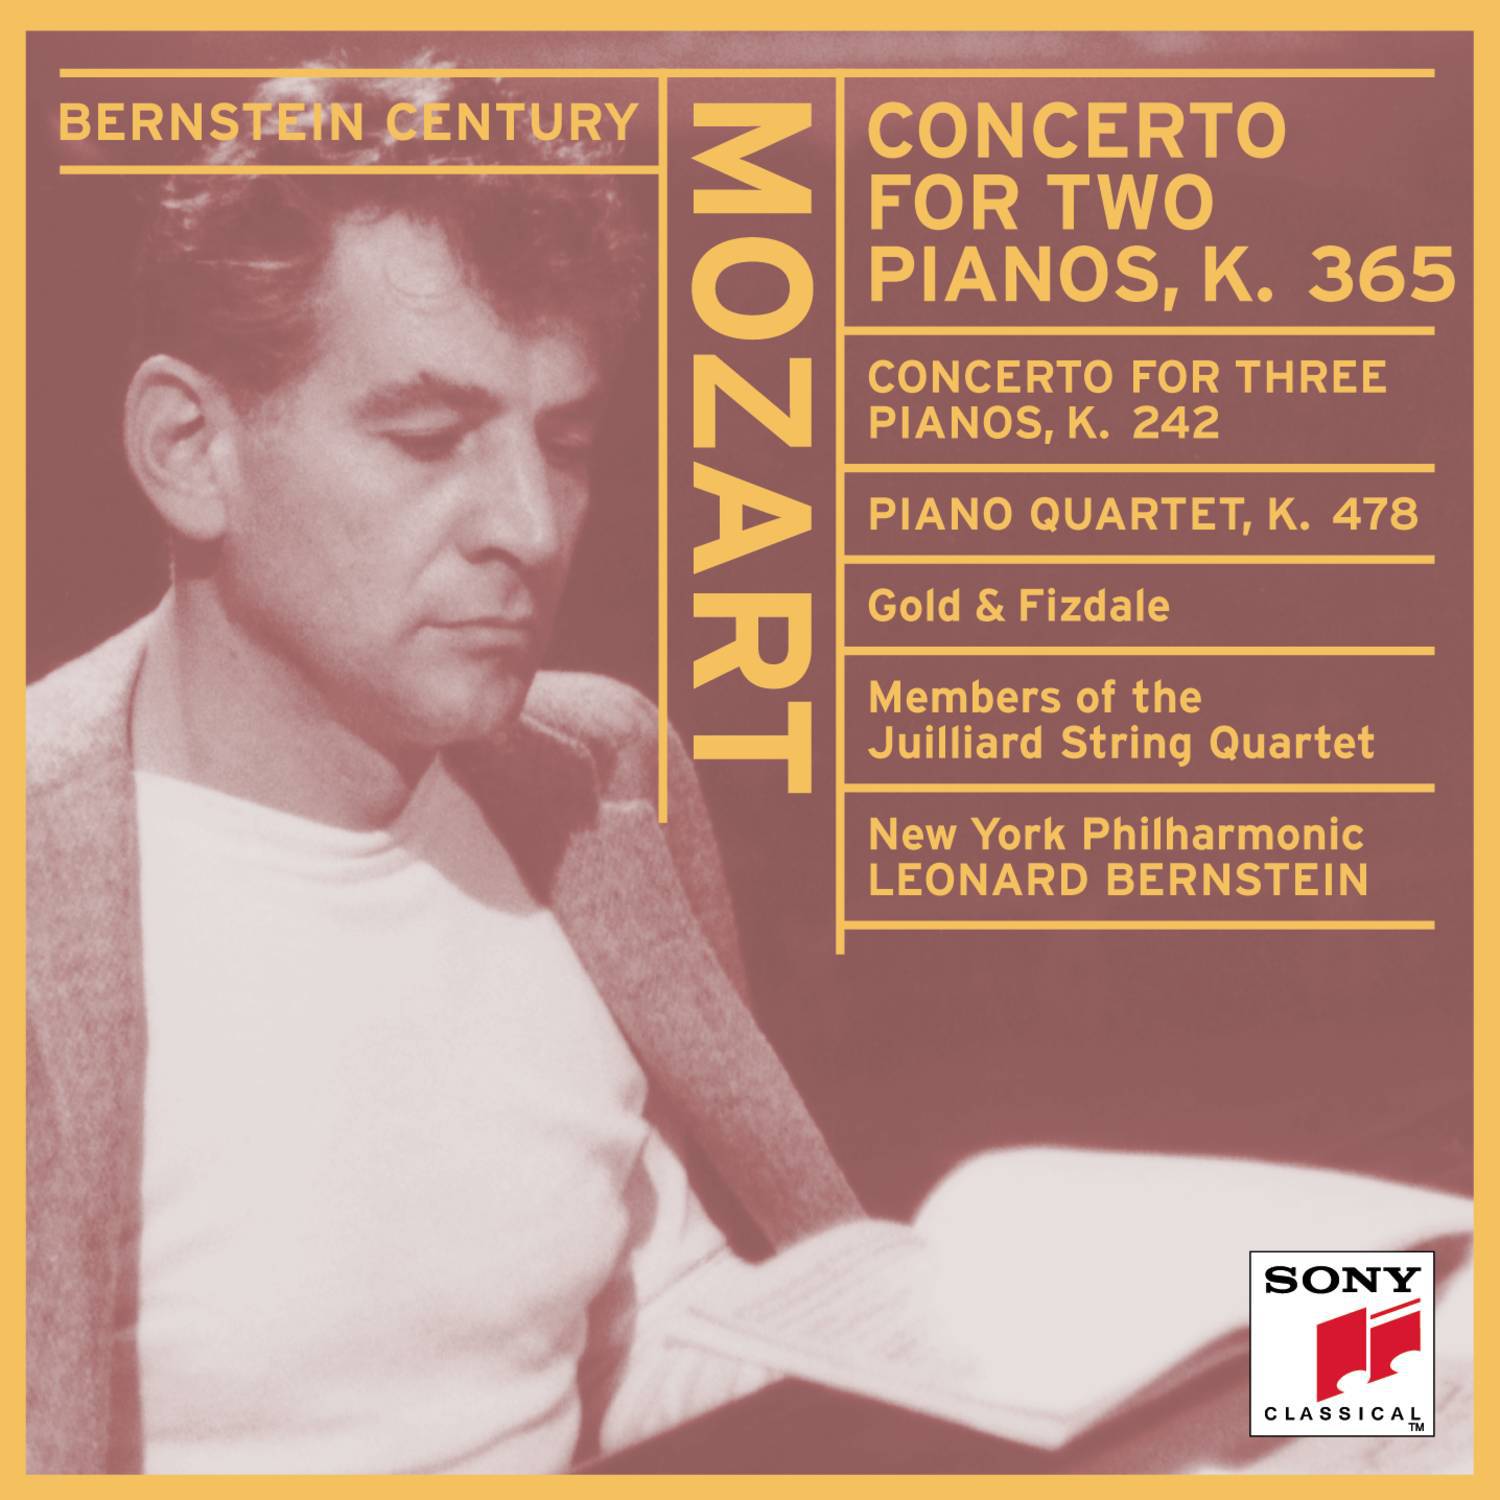 Bernstein Plays and Conducts Mozart